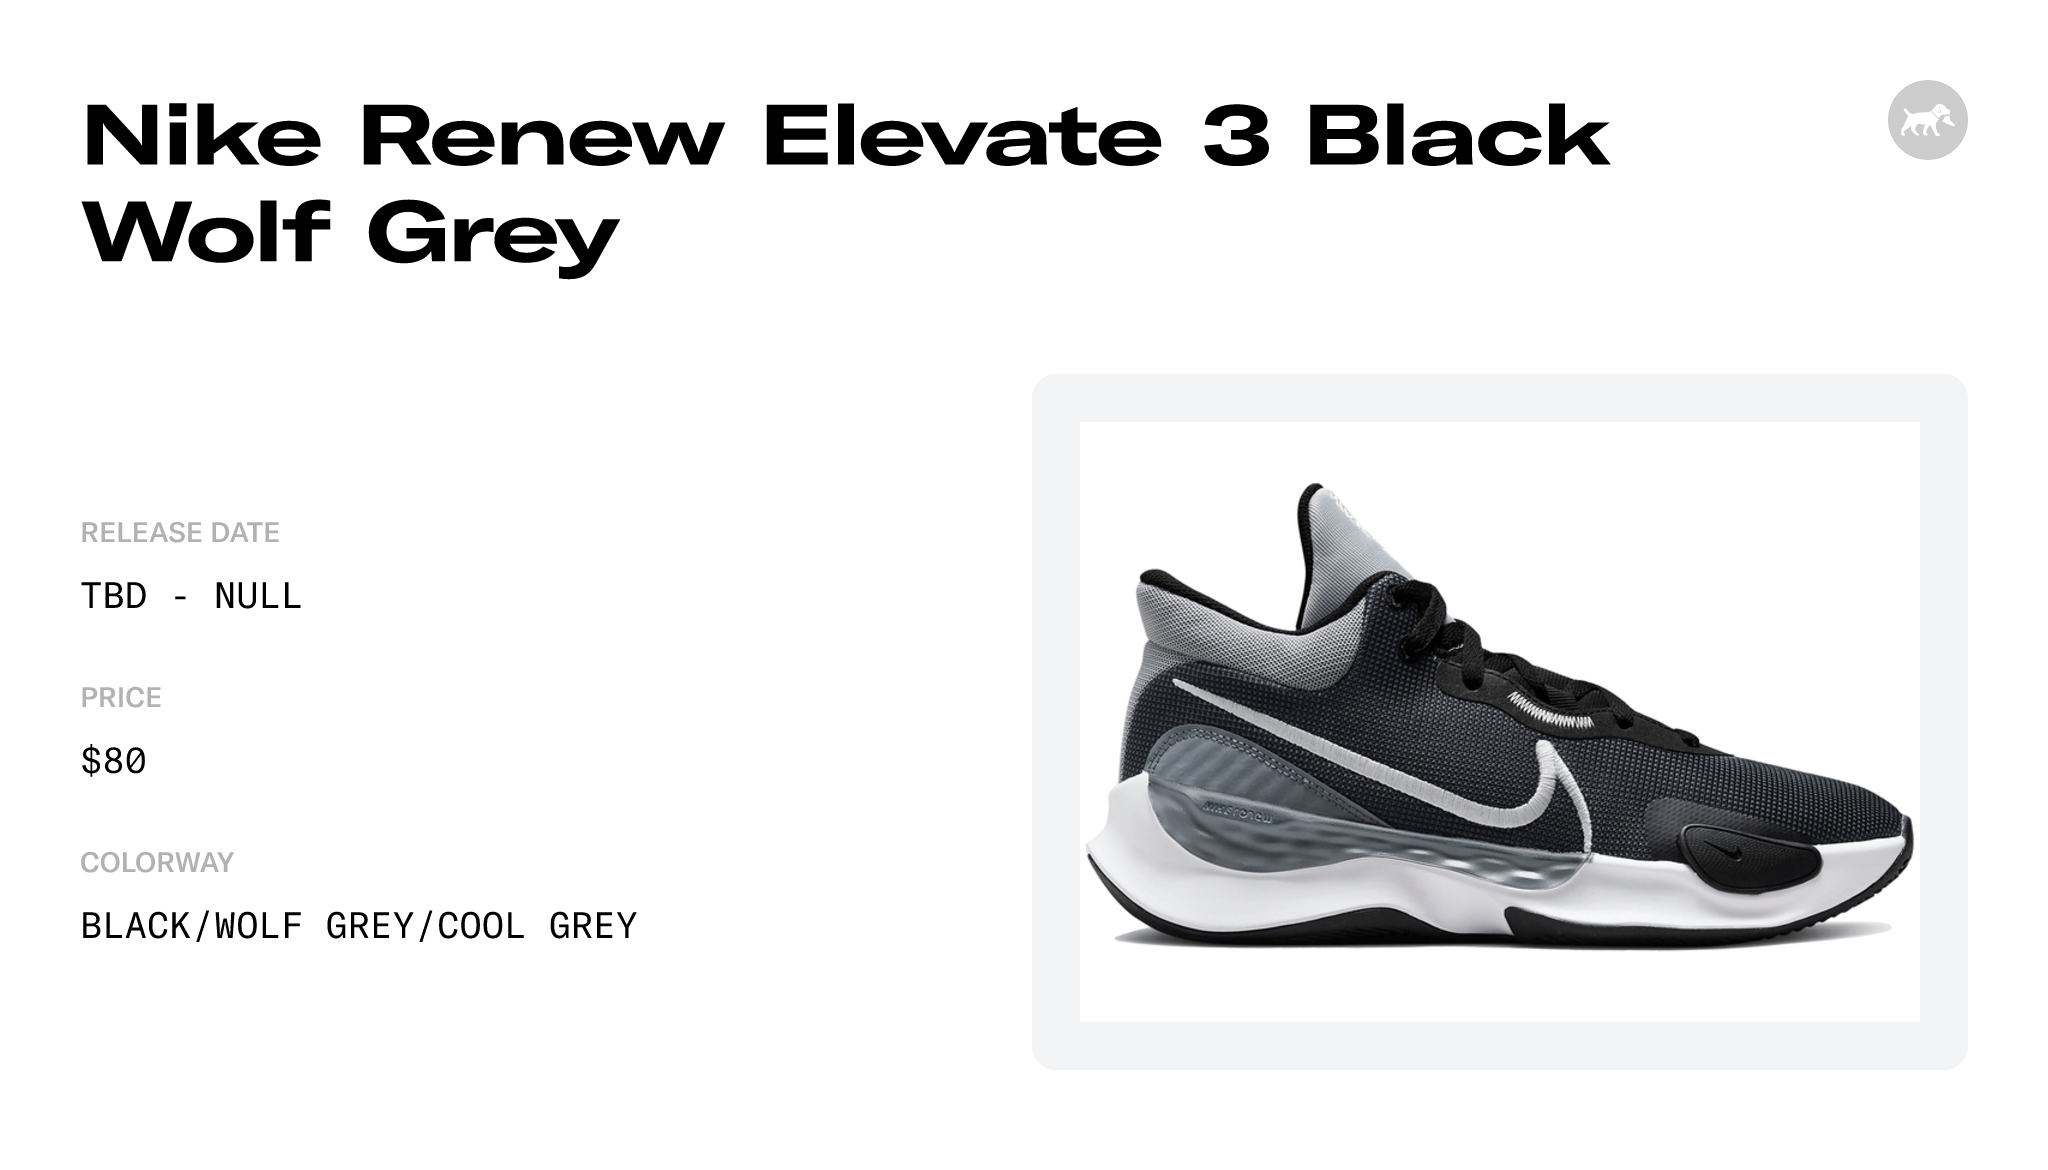 Nike Renew Elevate 3 Black Wolf Grey - DD9304-002 Raffles and Release Date